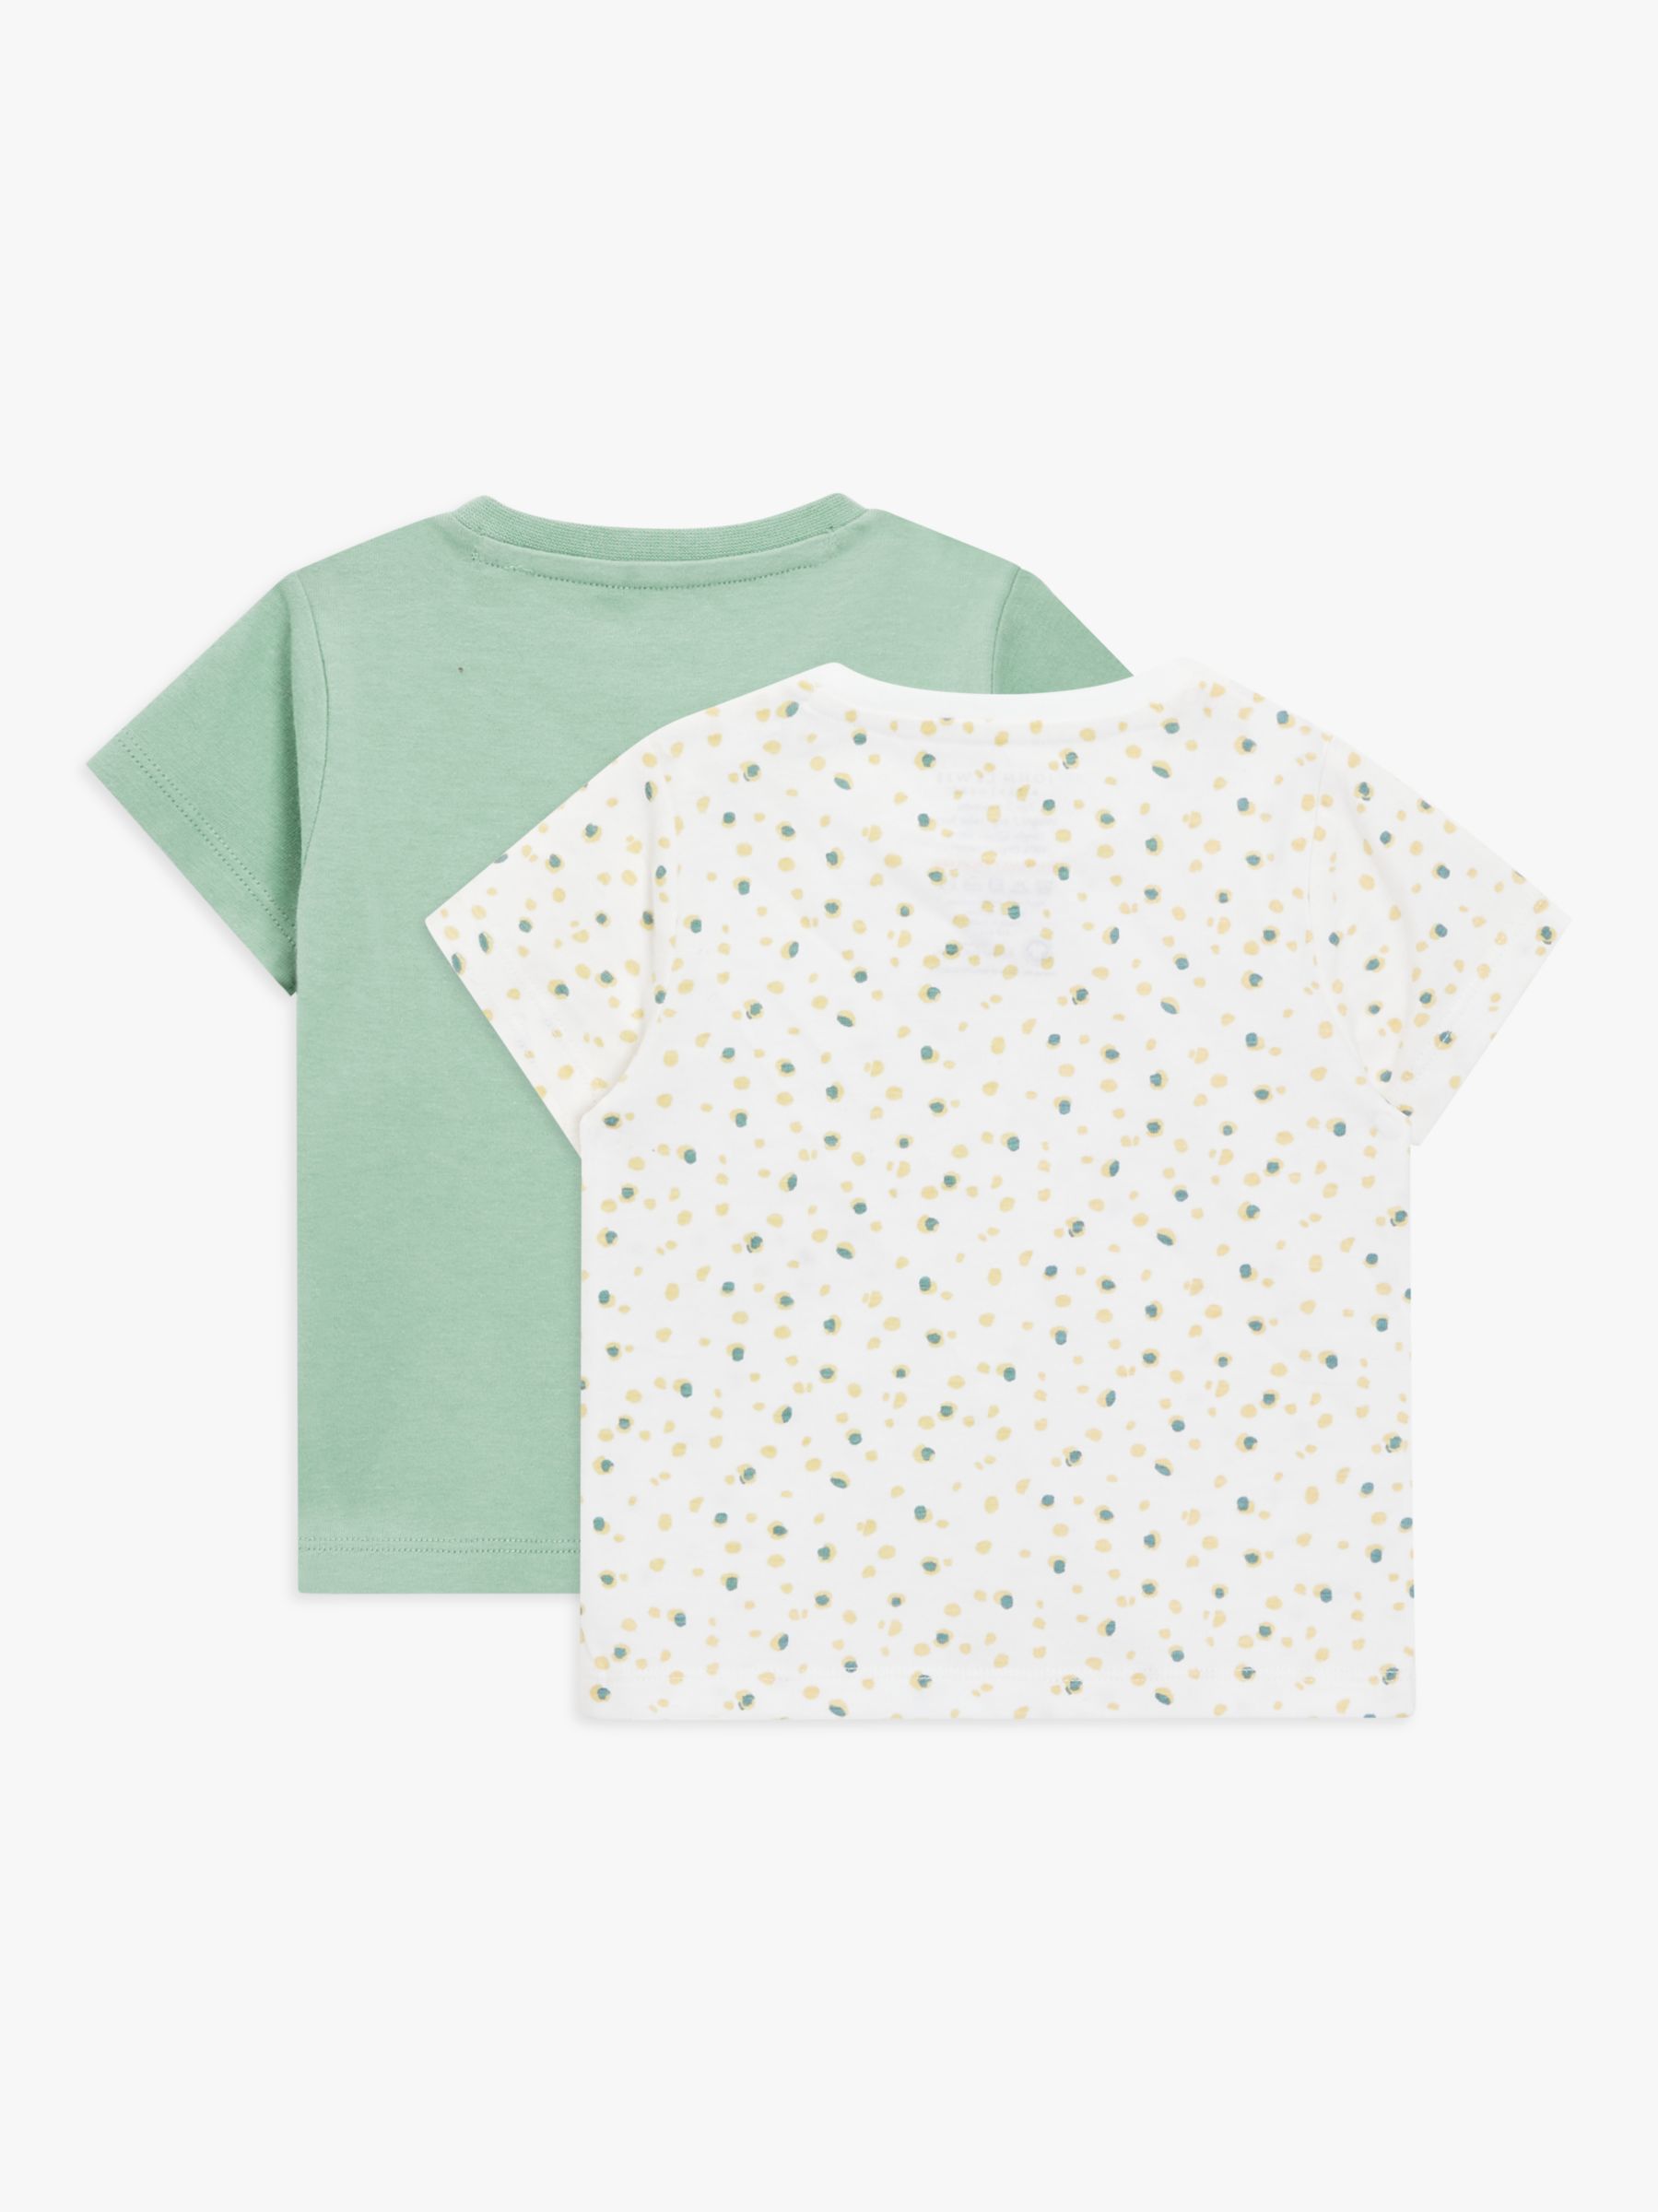 John Lewis Baby GOTS Organic Adaptive T-Shirt, Pack of 2, Multi, 0-3 months